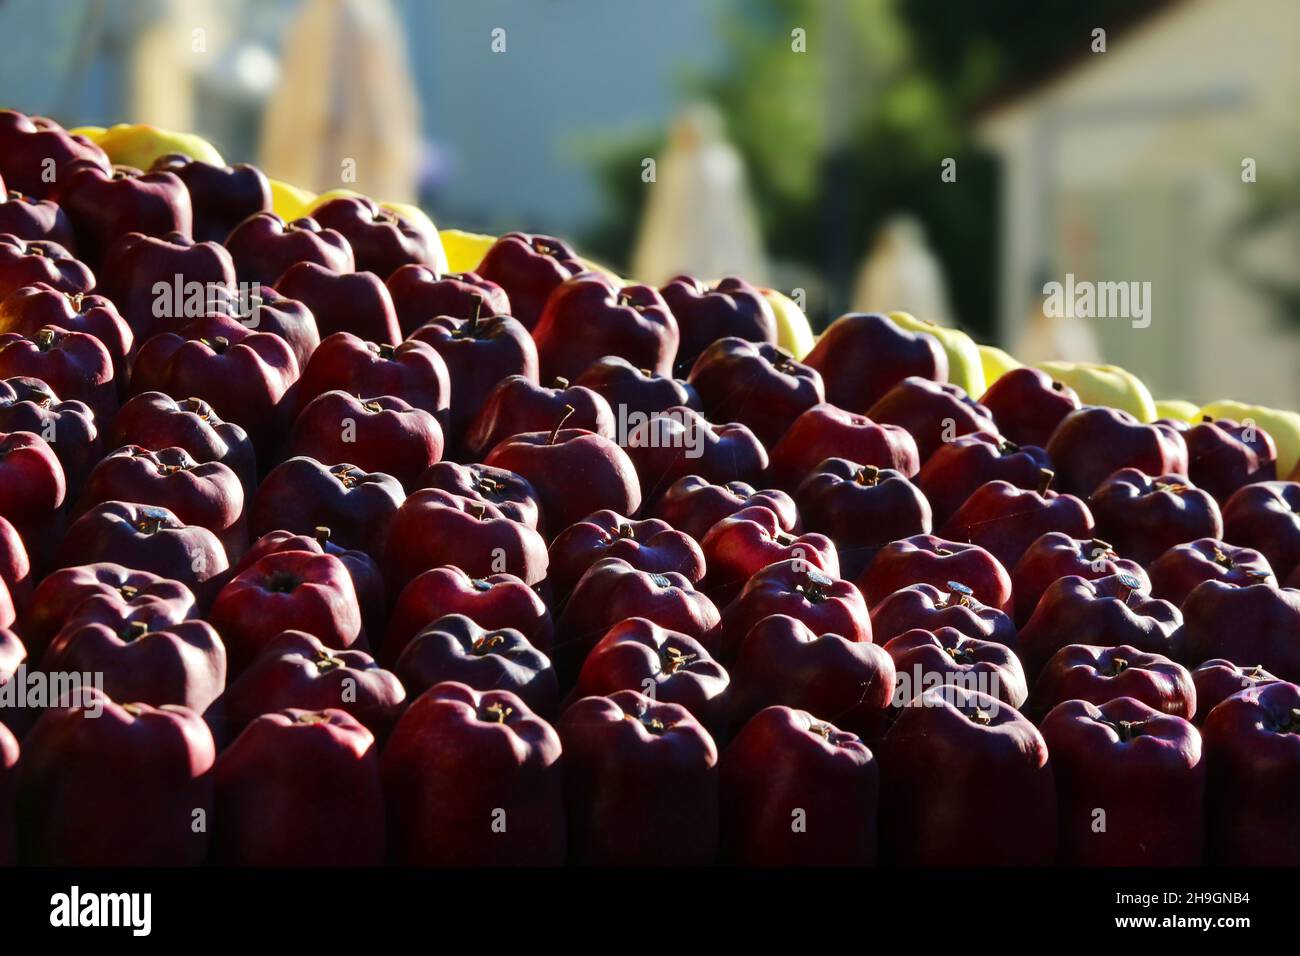 Apfel, Merano, Kurstadt, Weinfest, Trachtenfest, Äpfel dekoriert zum Großen Fest in Südtirol, Italien. Foto Stock